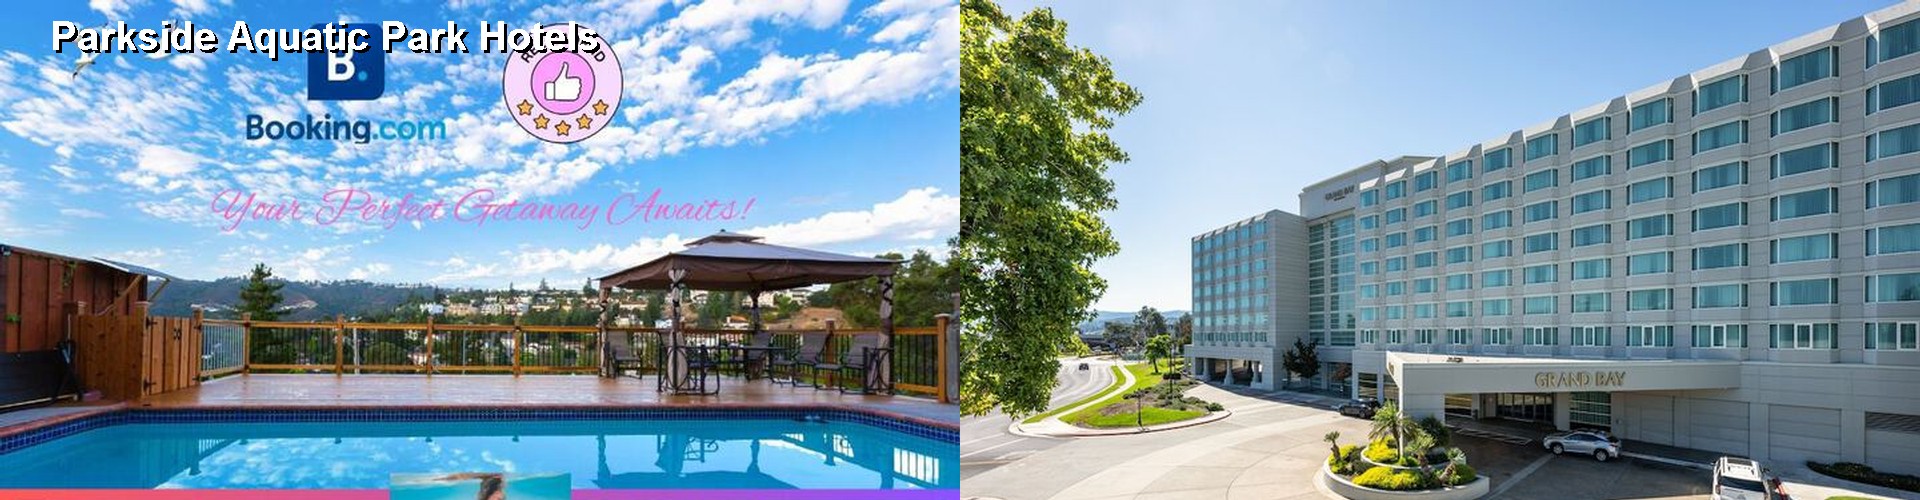 5 Best Hotels near Parkside Aquatic Park